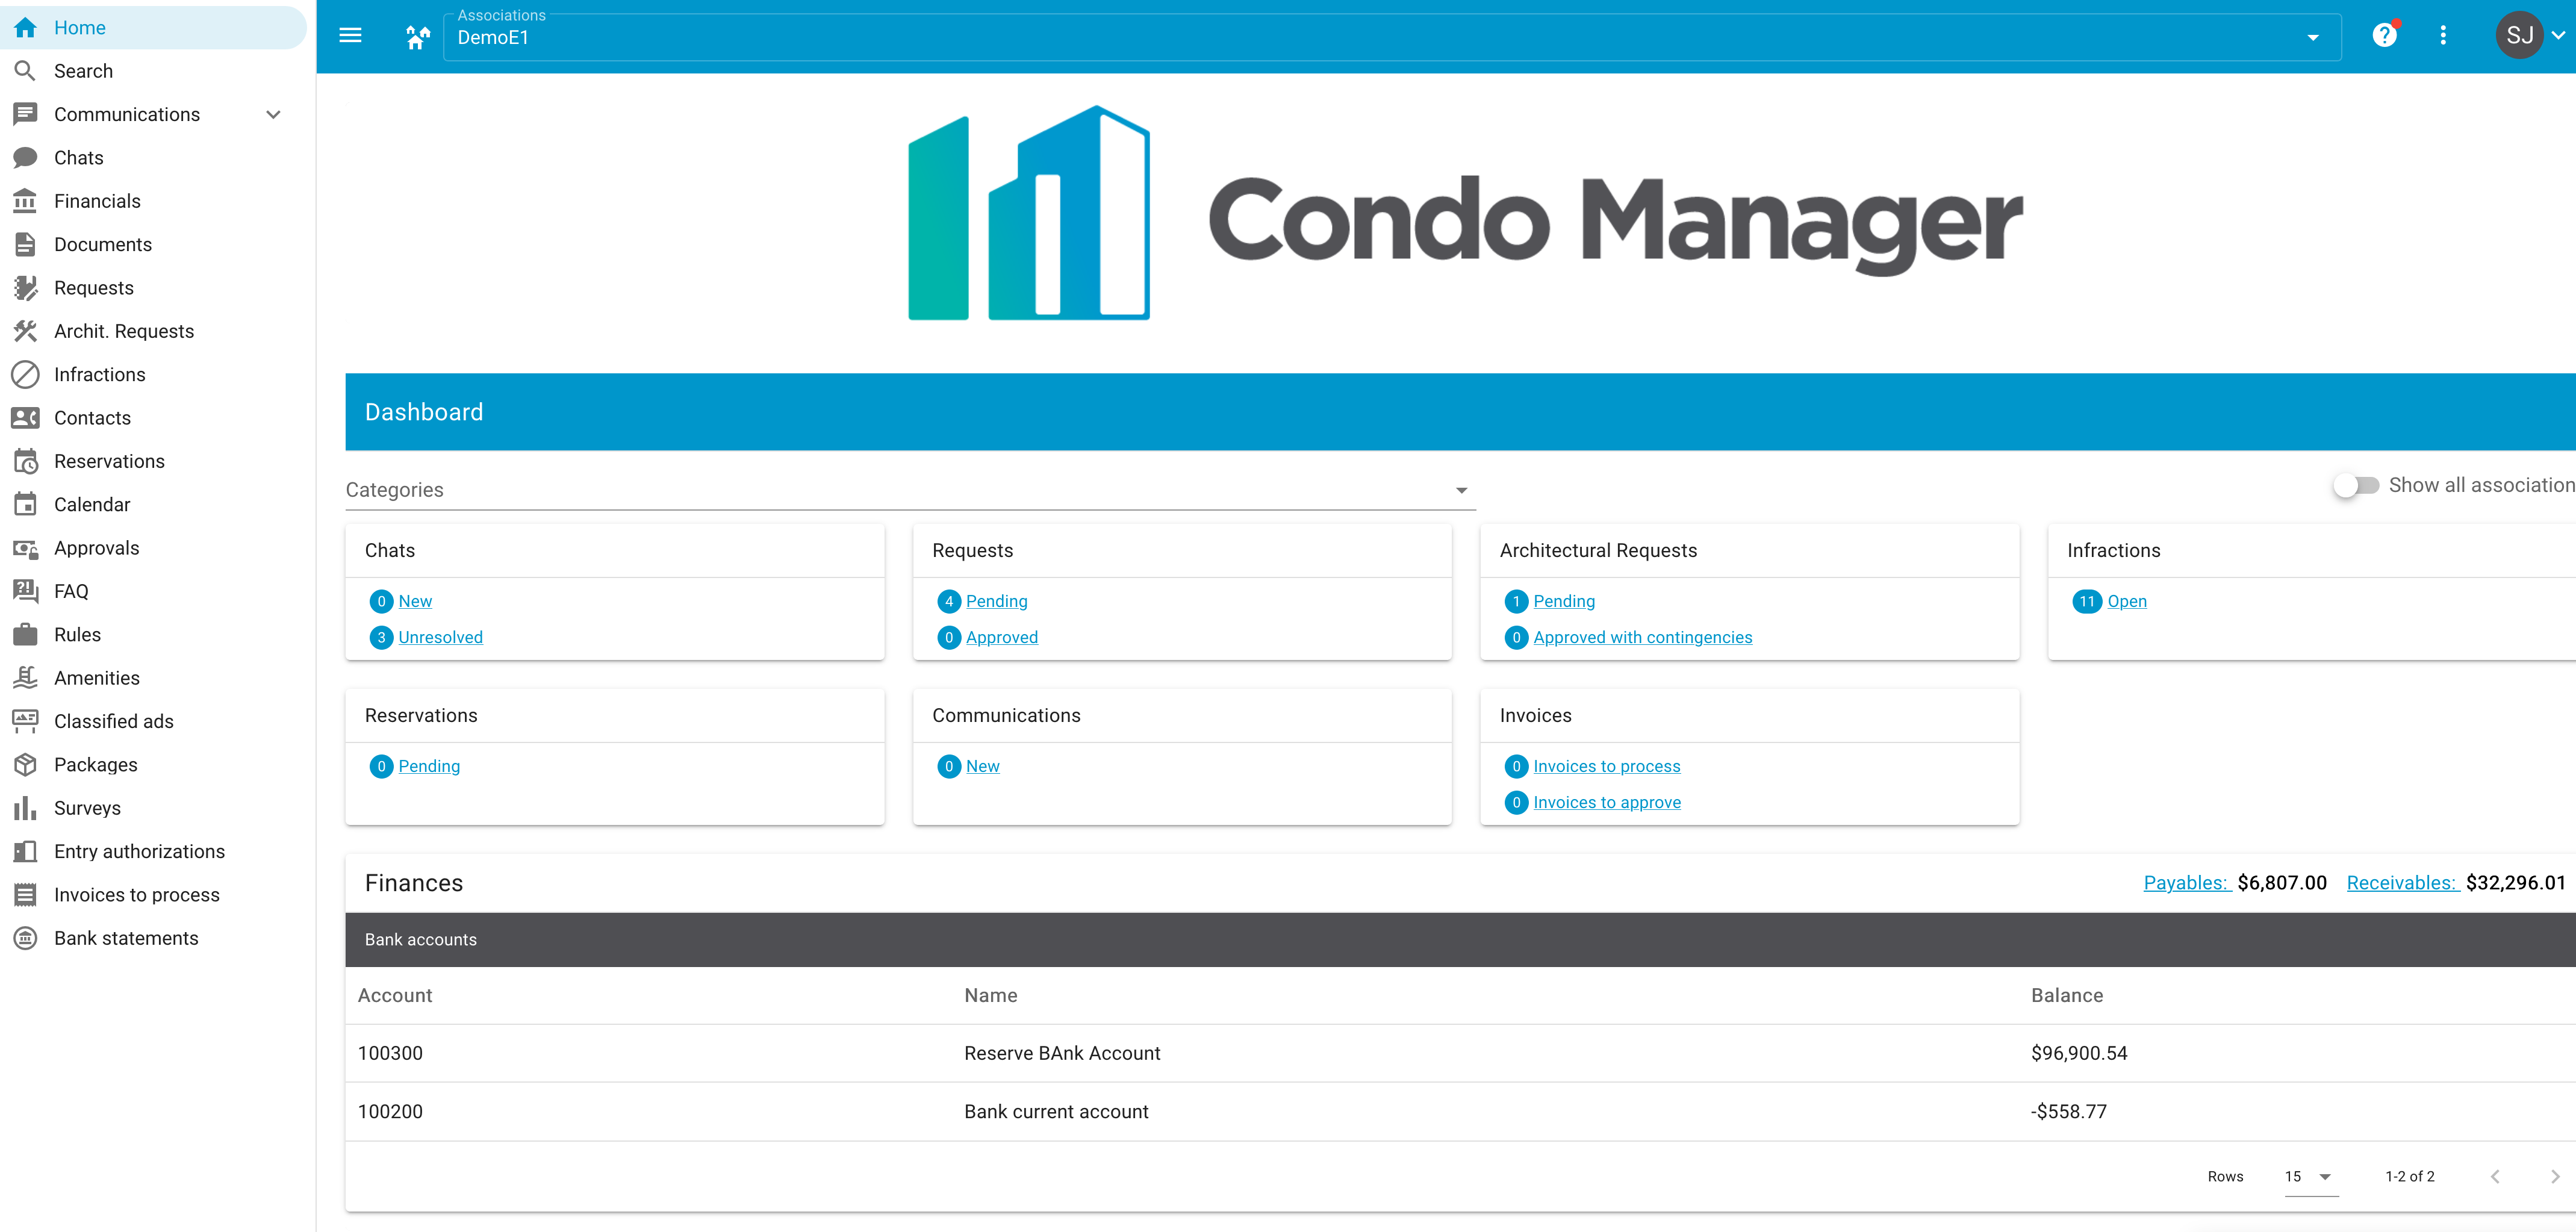 Condo Manager App/Portal